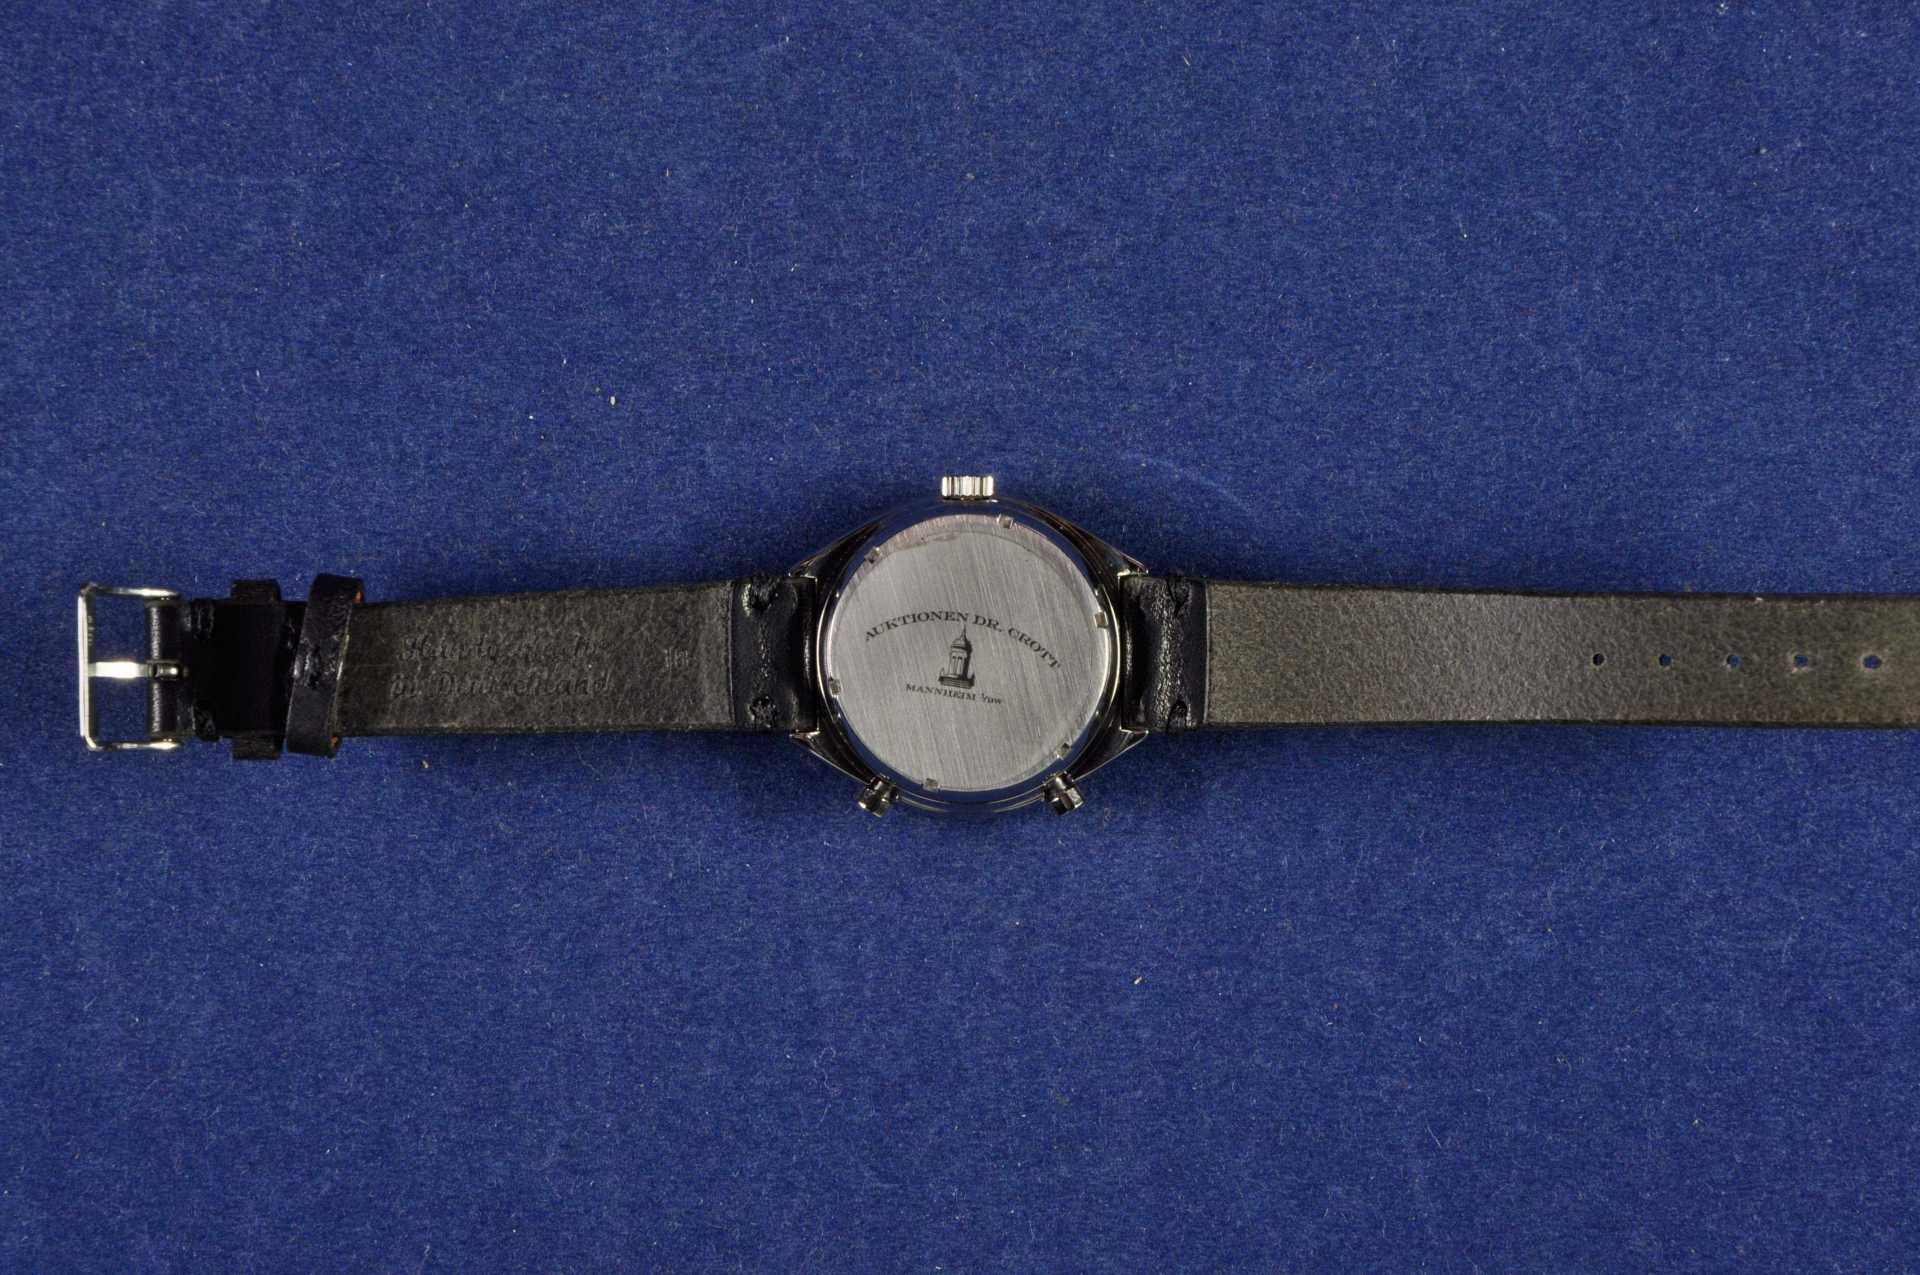 Herren Armband Uhr \Carrera Heuer\ Chronograph. Ca. 38mm, um 1975, Edelstahlgehäuse Nr. 110573,  Ank - Bild 3 aus 6